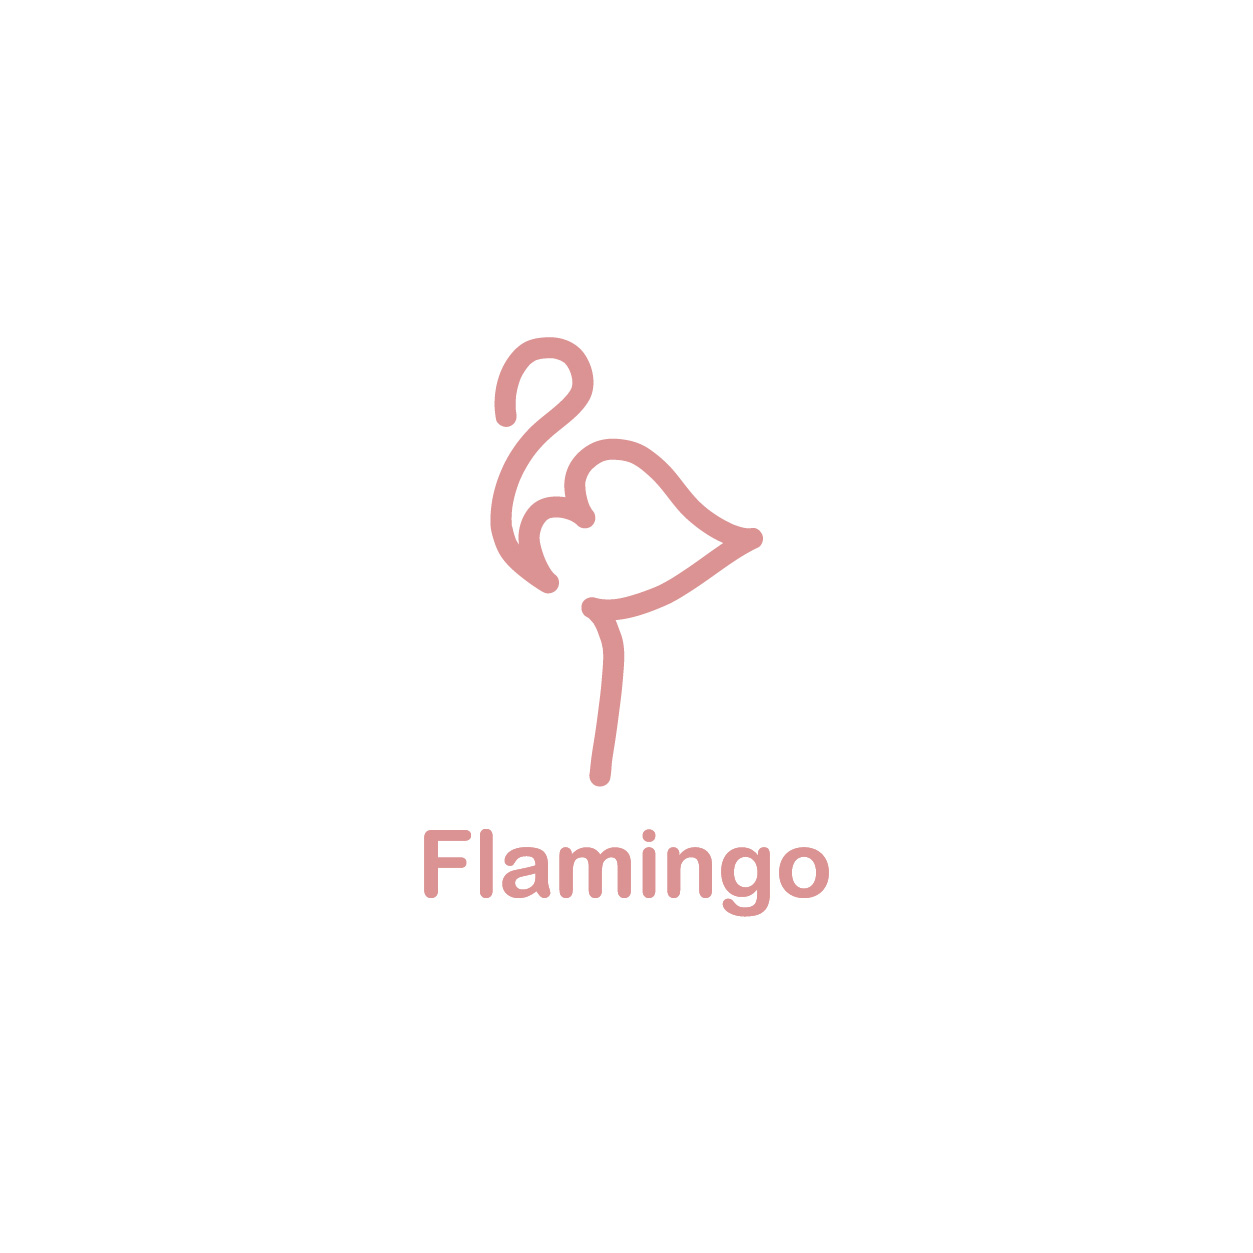 Flamingo Brand Logo Design フラミンゴ ブランドロゴデザイン Yourmoon Inc ユアムーン株式会社